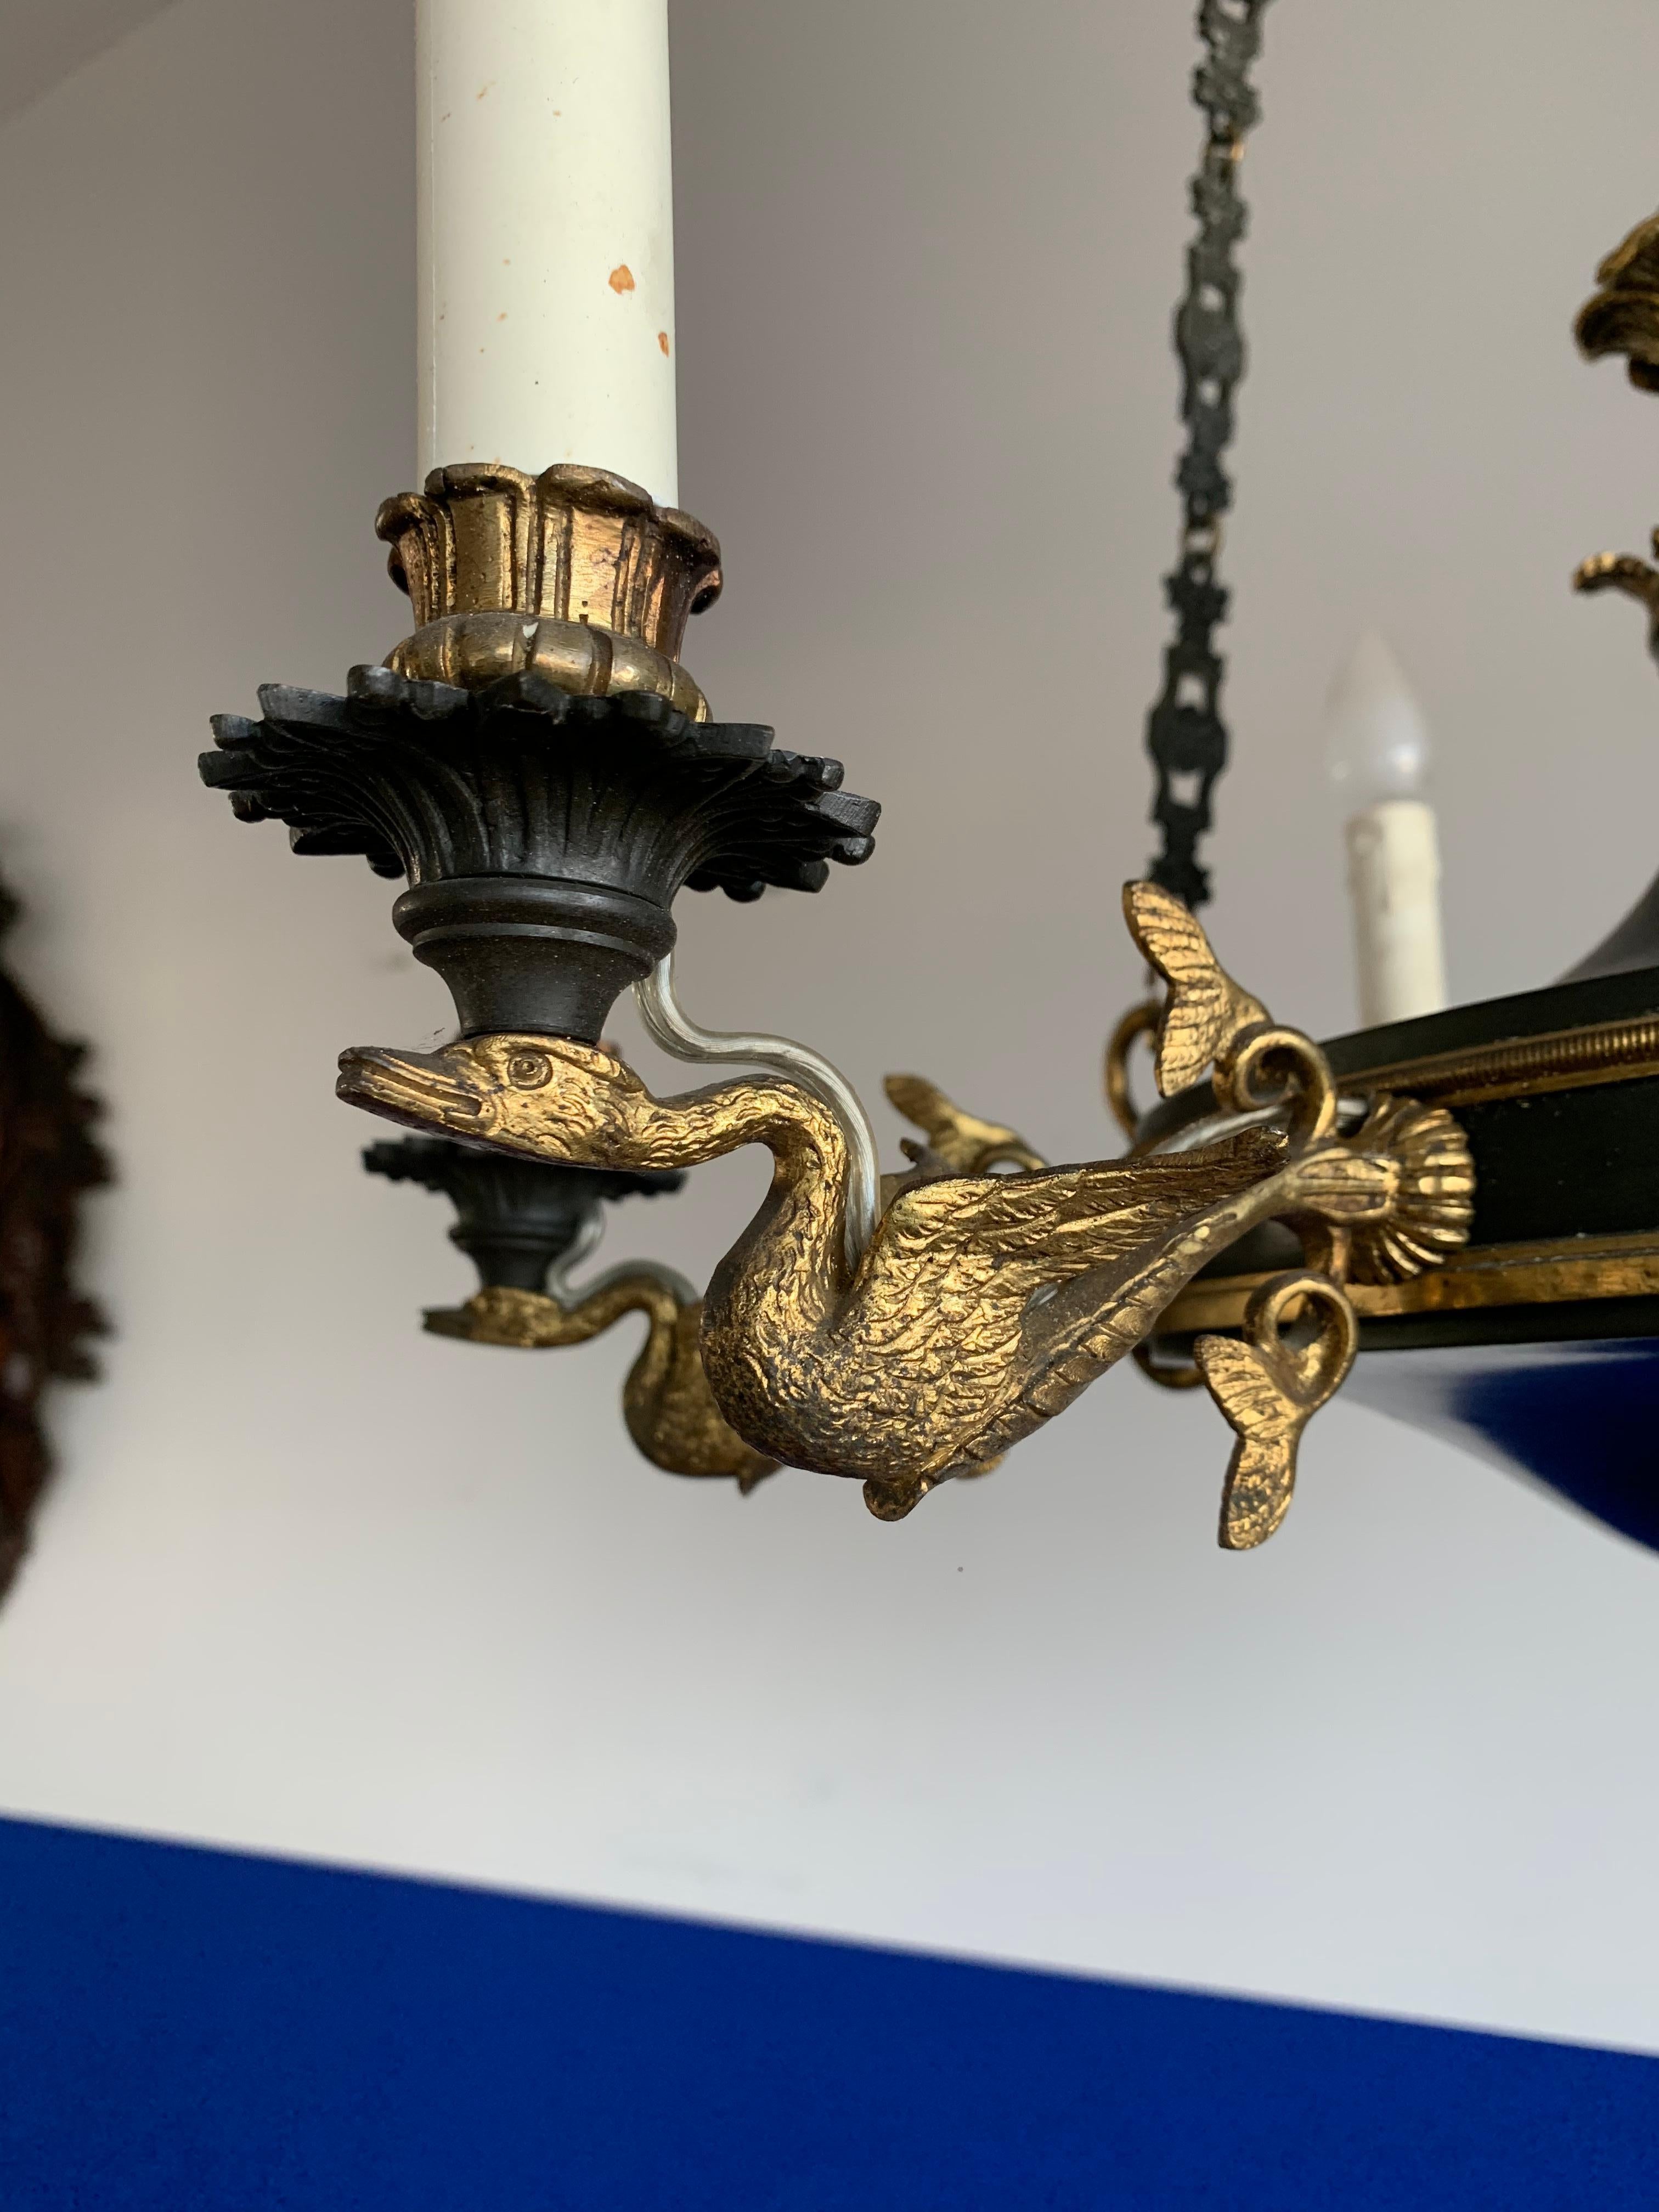 Antique & Striking Empire Revival Gilt Bronze Swan Sculptures Pendant Chandelier For Sale 10